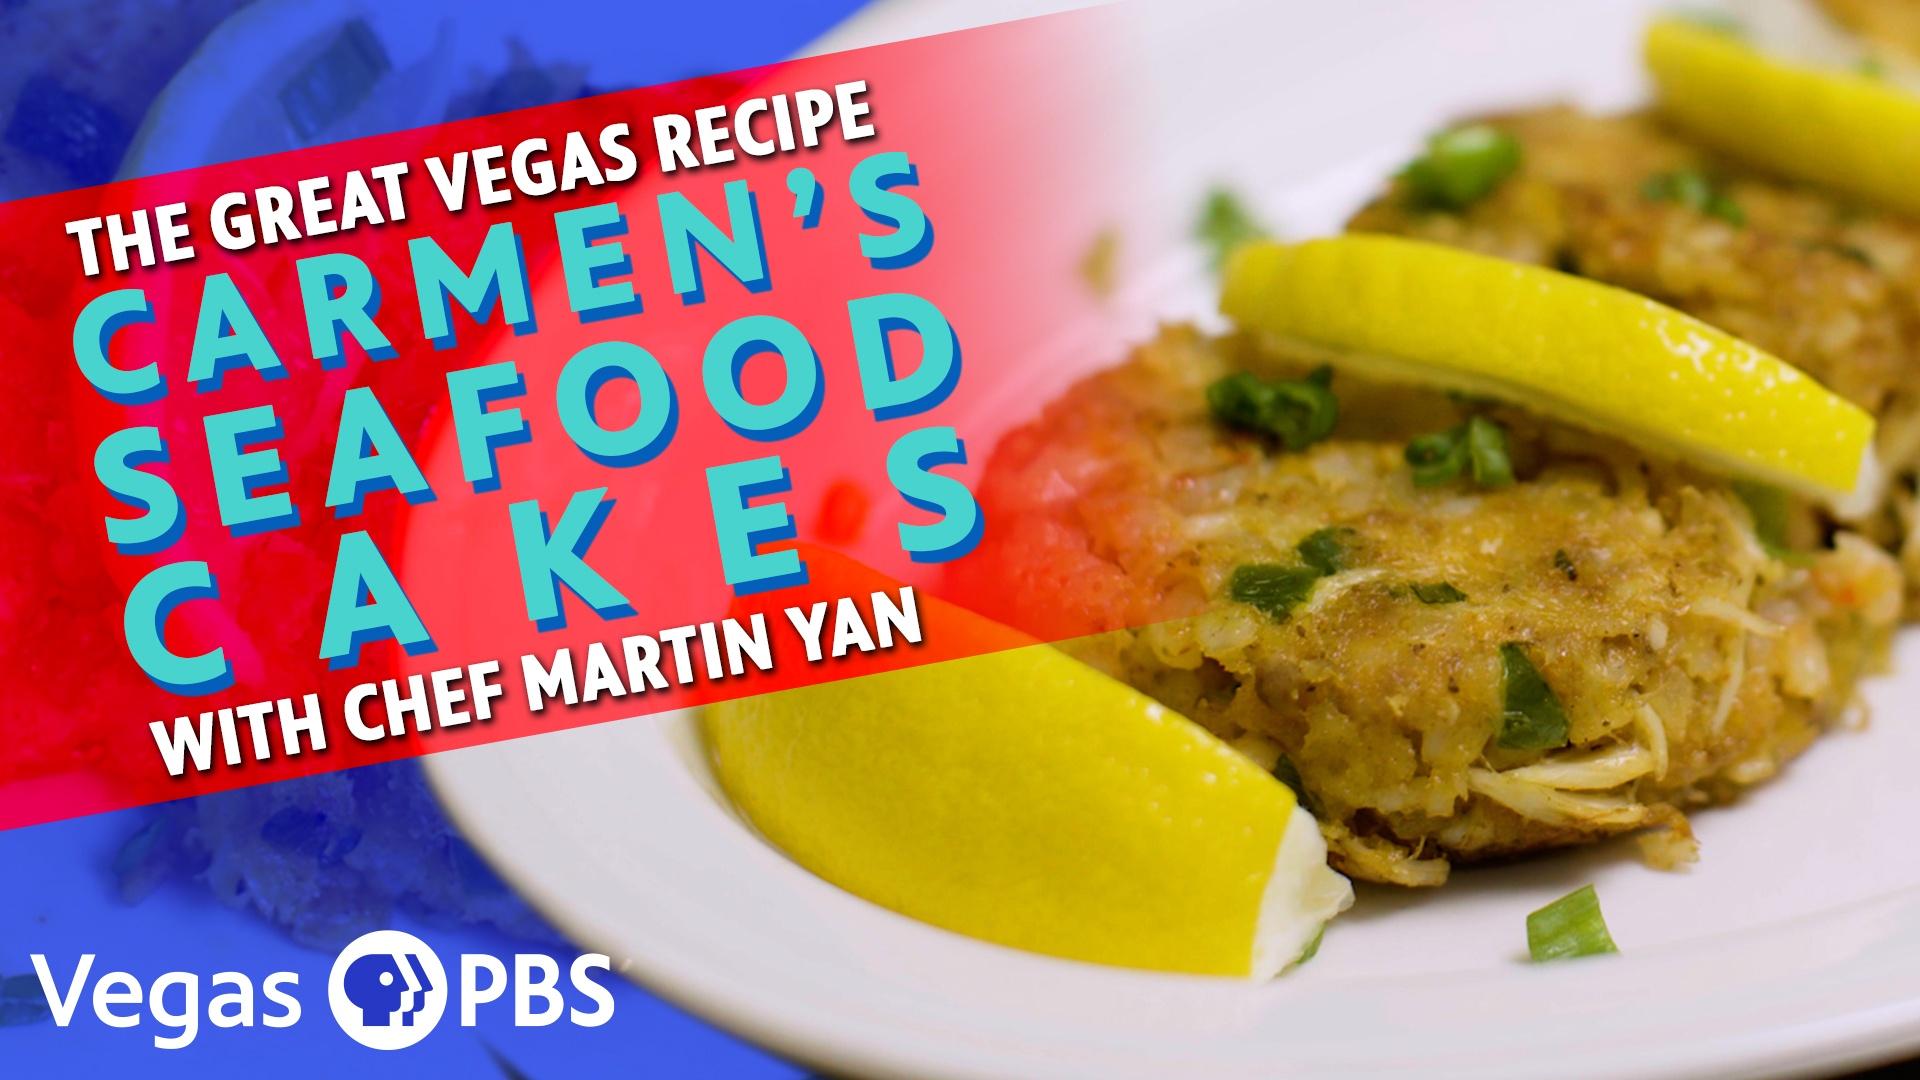 The Great Vegas Recipe with Martin Yan and Carmen